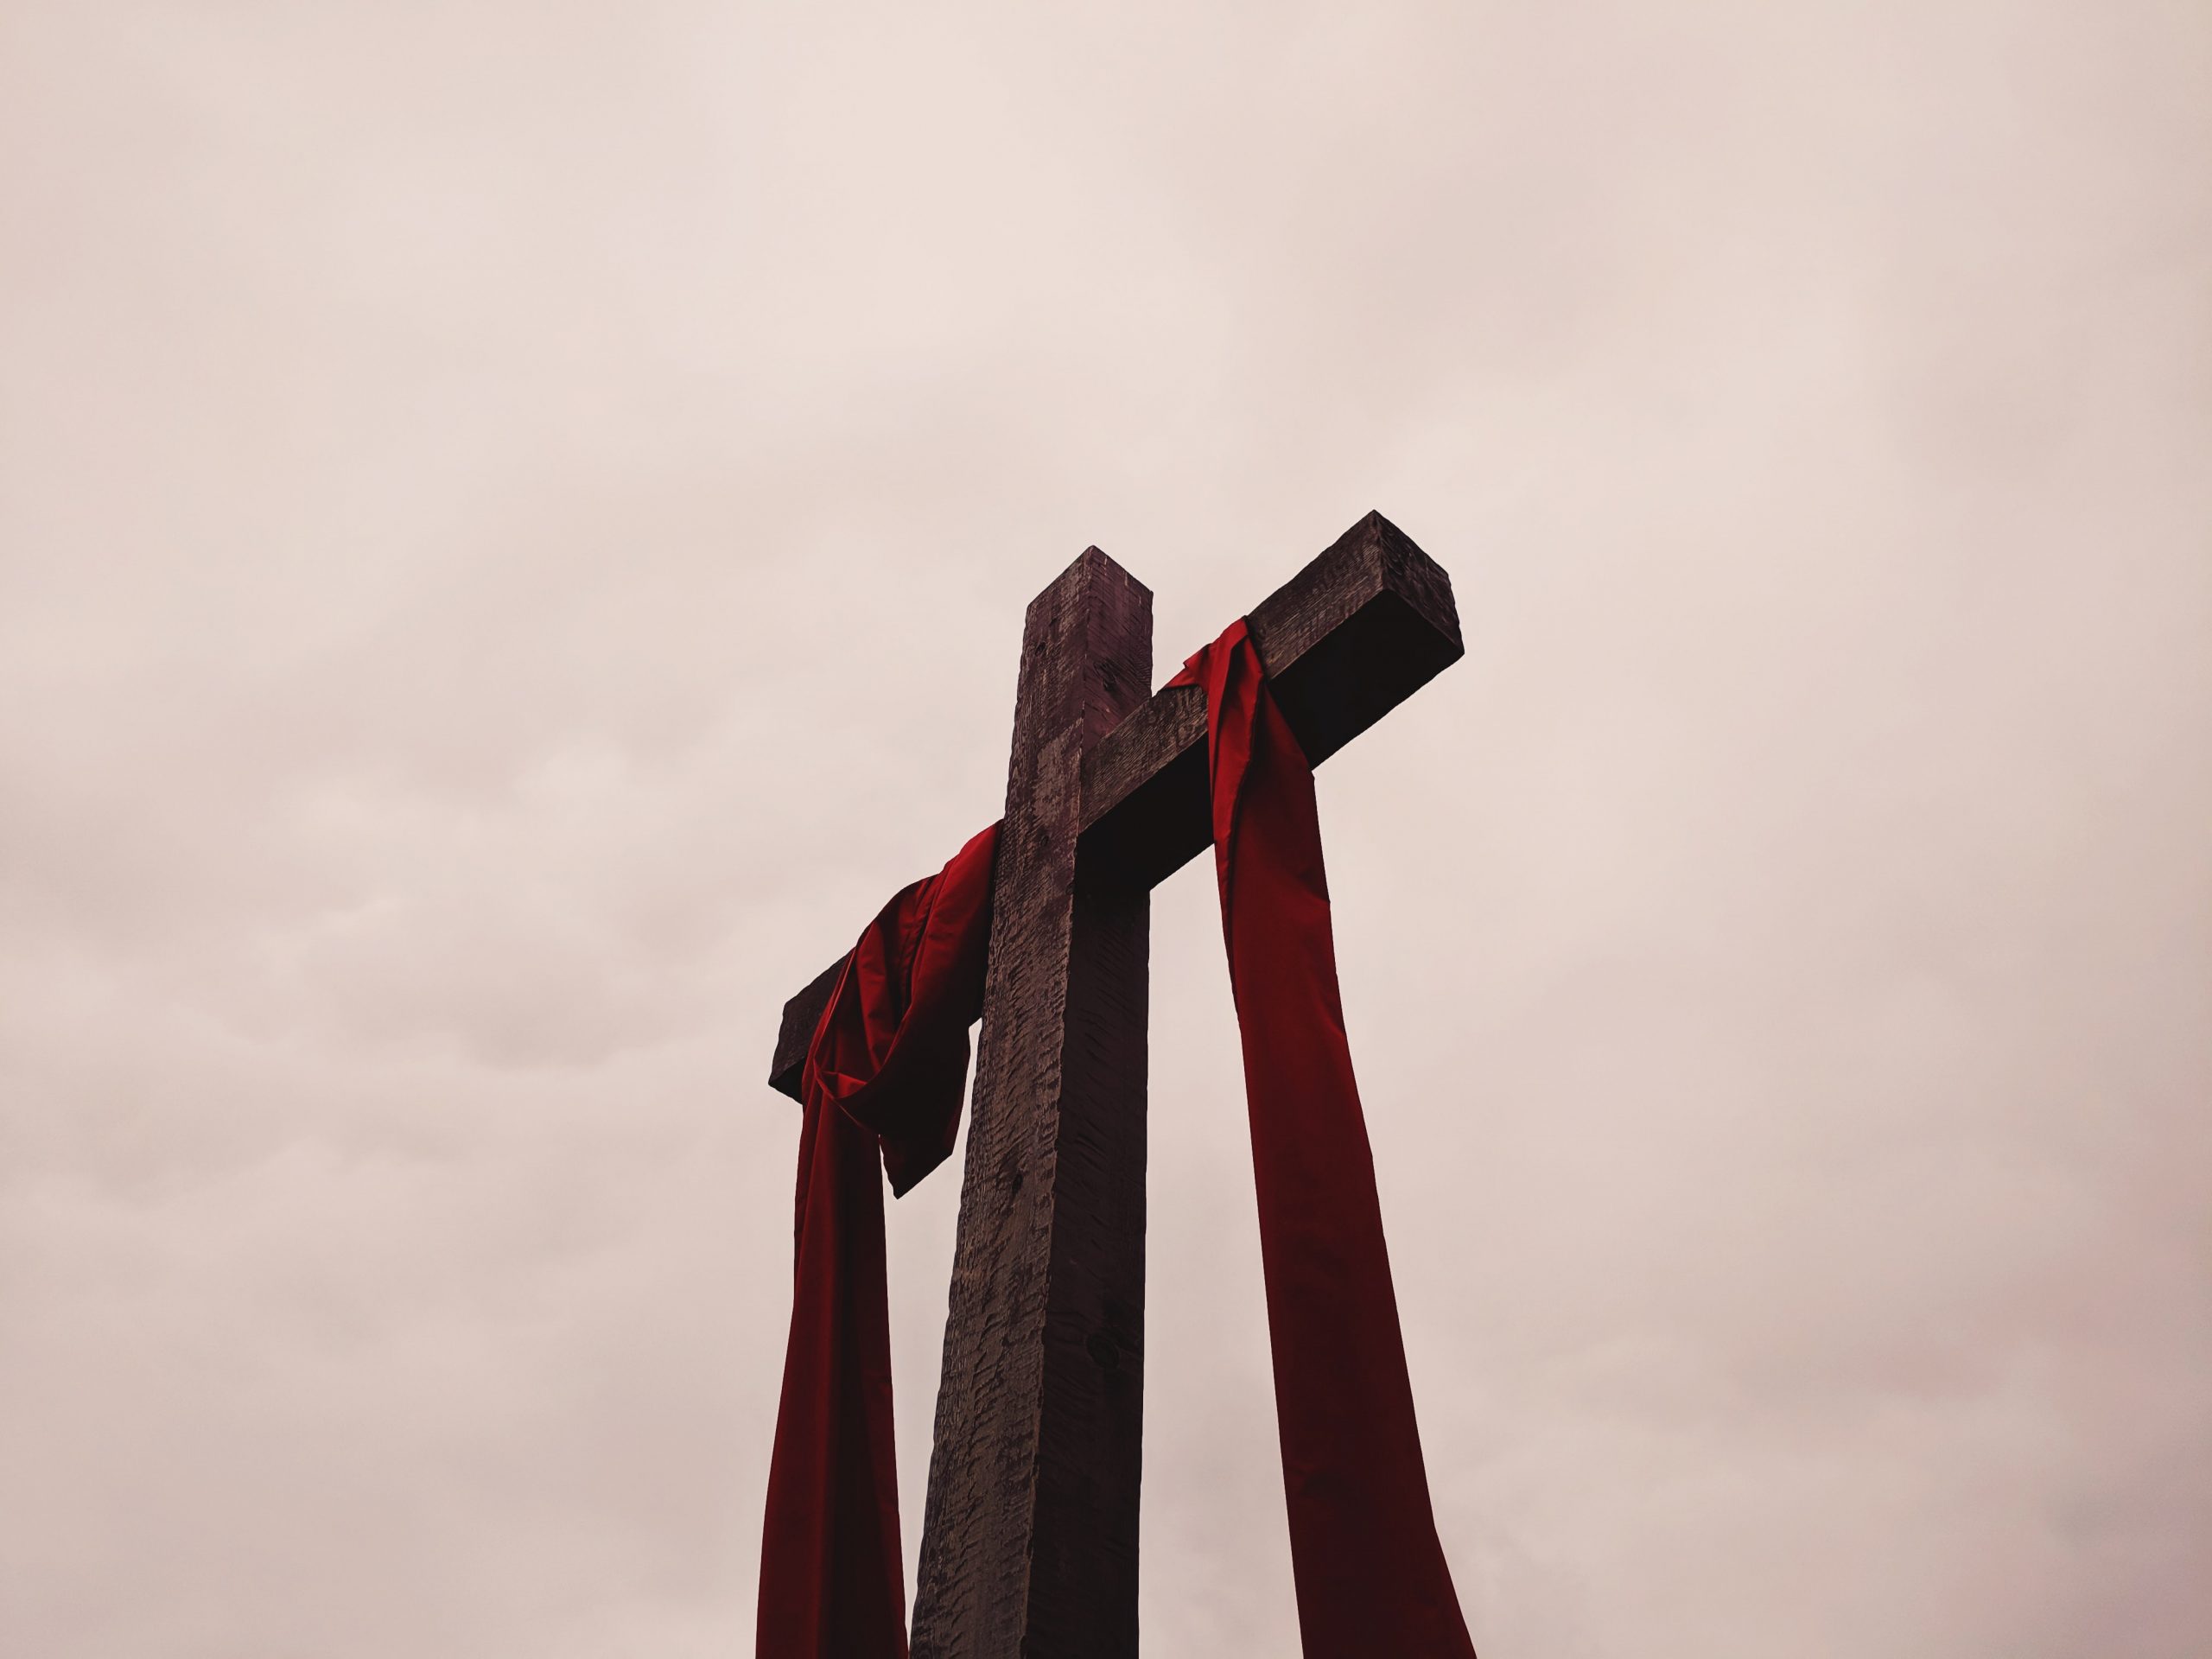 7 Meter hohes Kreuz im Garten - Ist das rechtens?